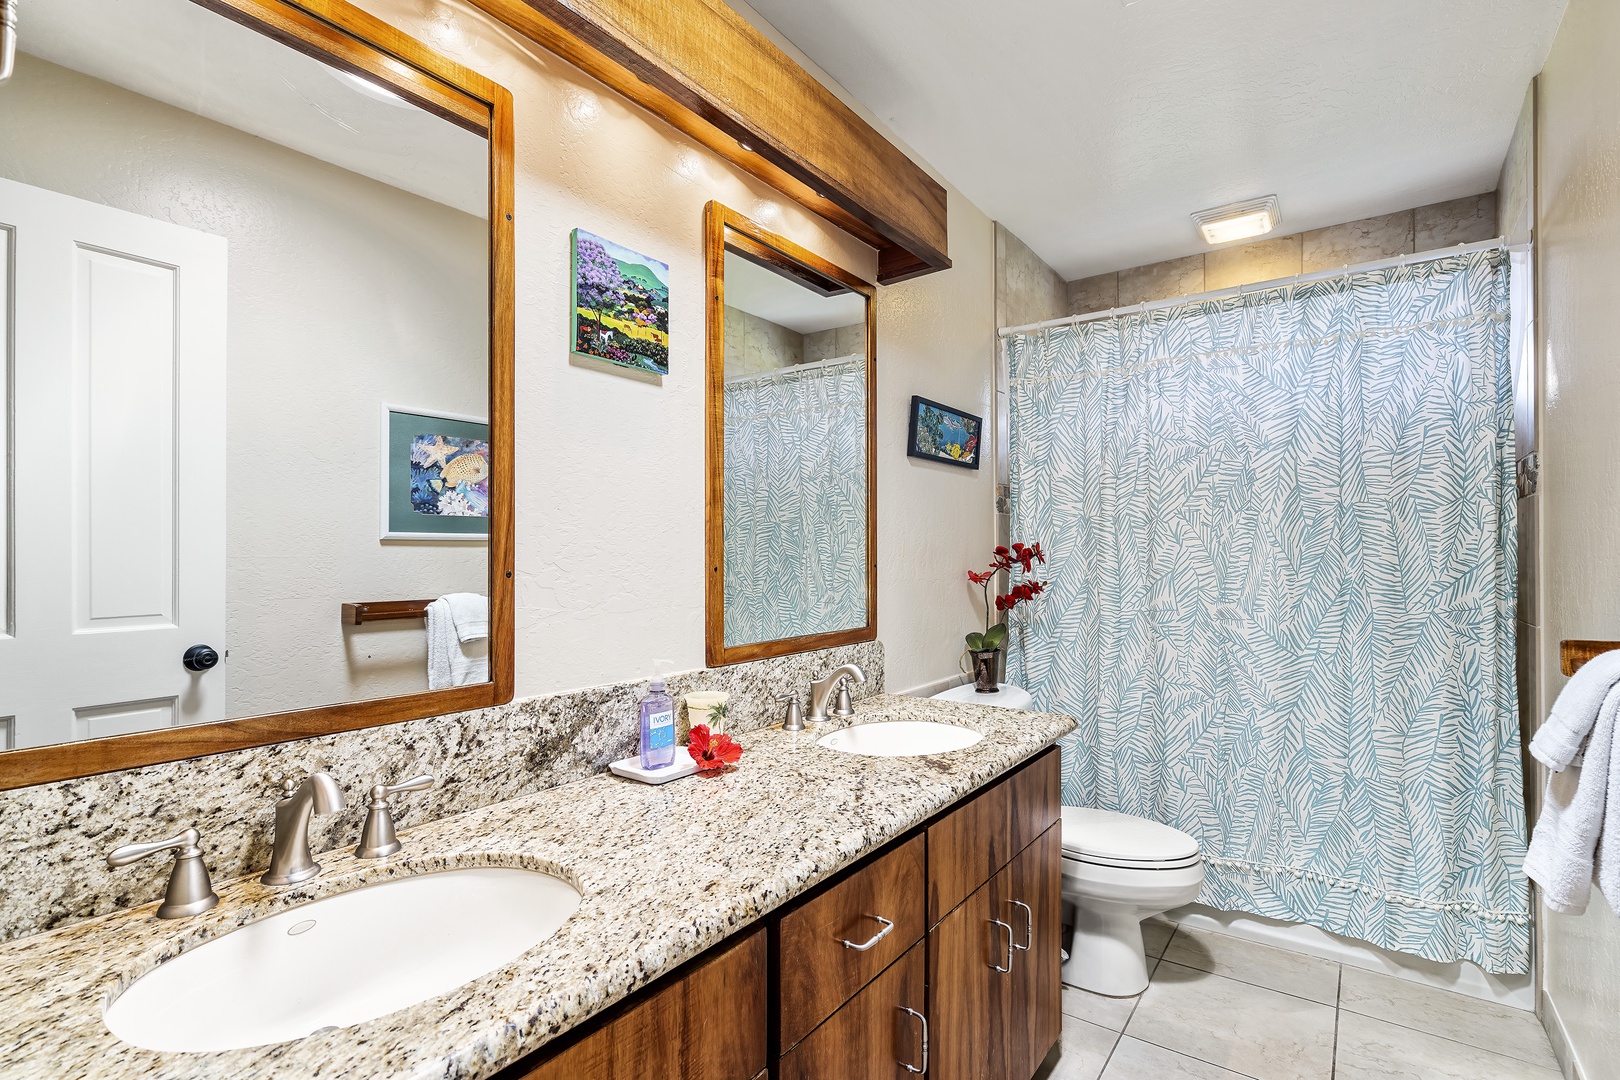 Kailua Kona Vacation Rentals, Kanaloa at Kona 3304 - Guest bathroom equipped with dual vanities and shower/tub combo